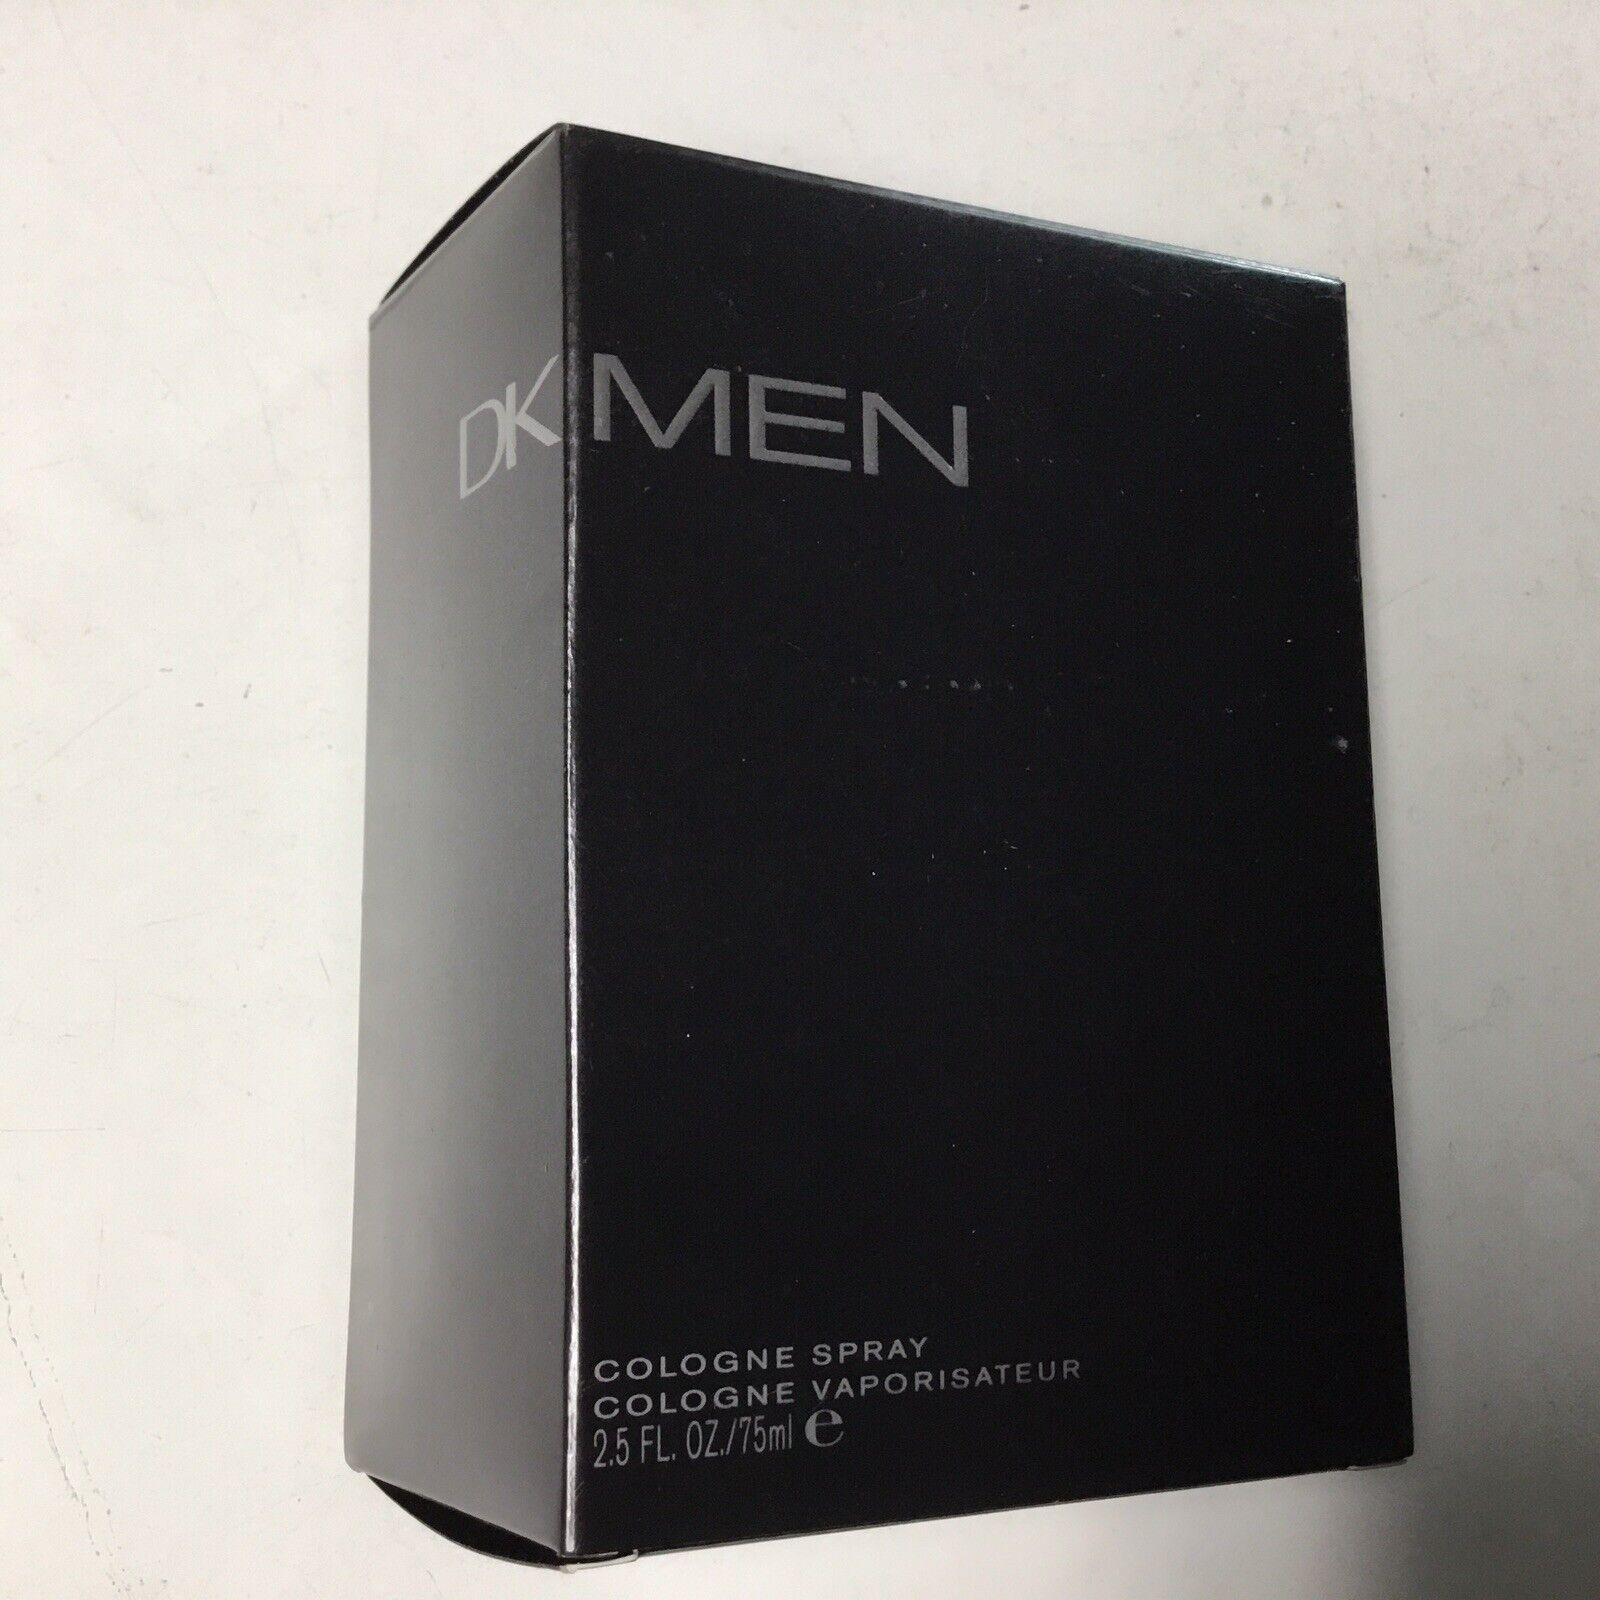 VINTAGE DK MEN FUEL men’s cologne spray 2.5 oz in Box